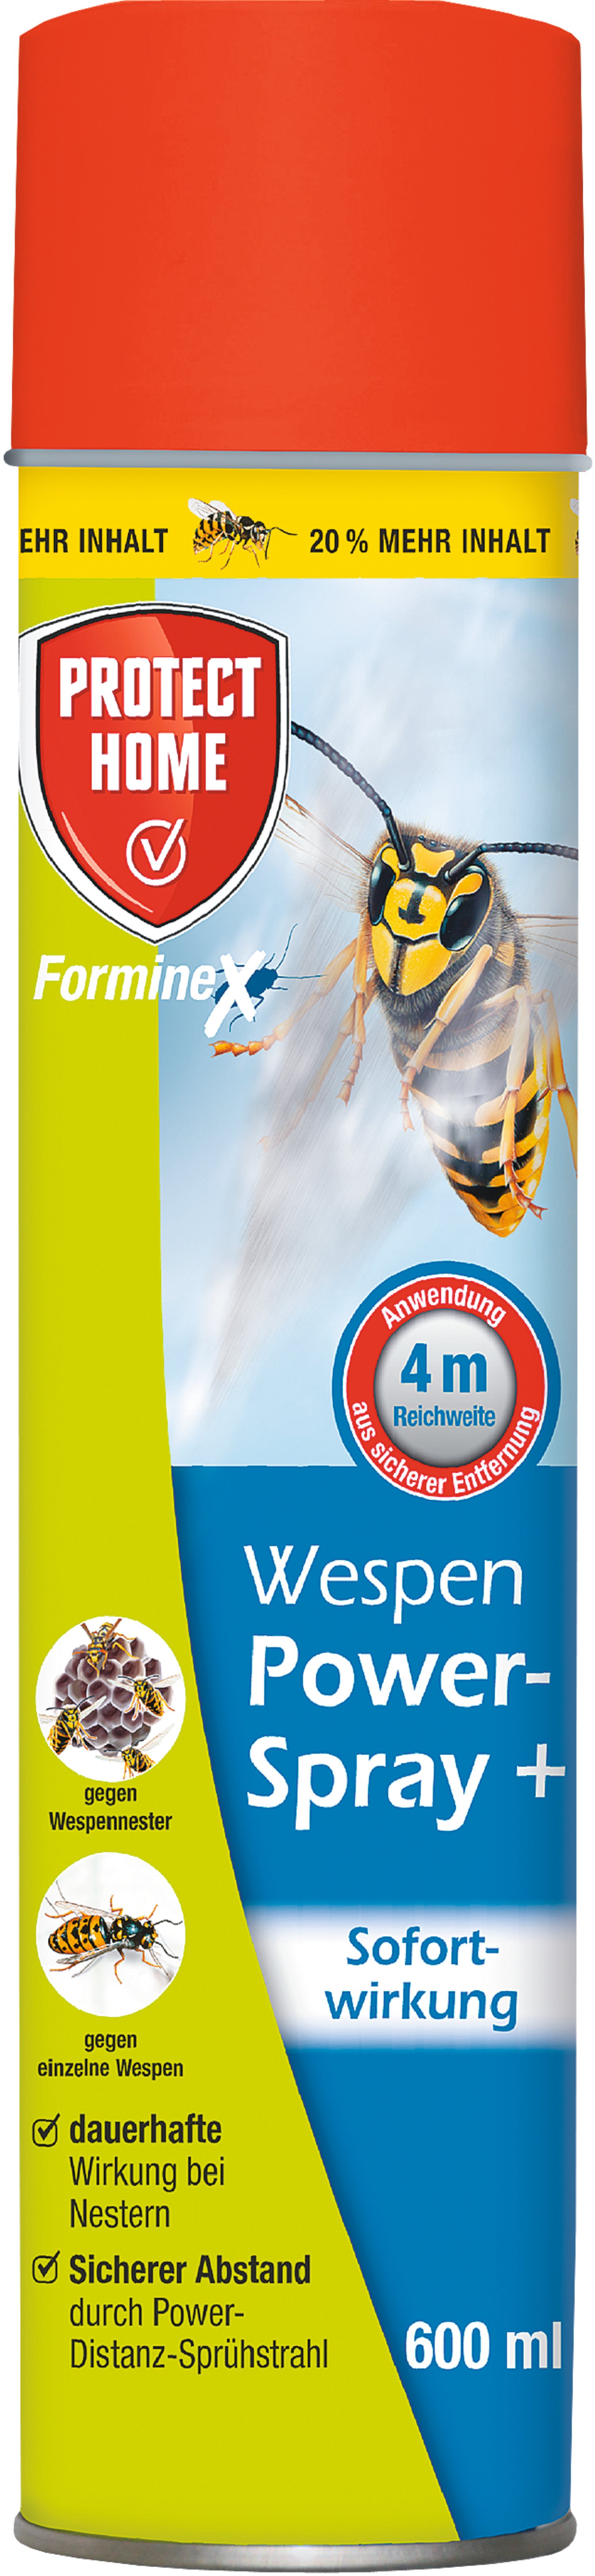 PROTECT HOME FormineX Wespen-Powerspray + 600 ml